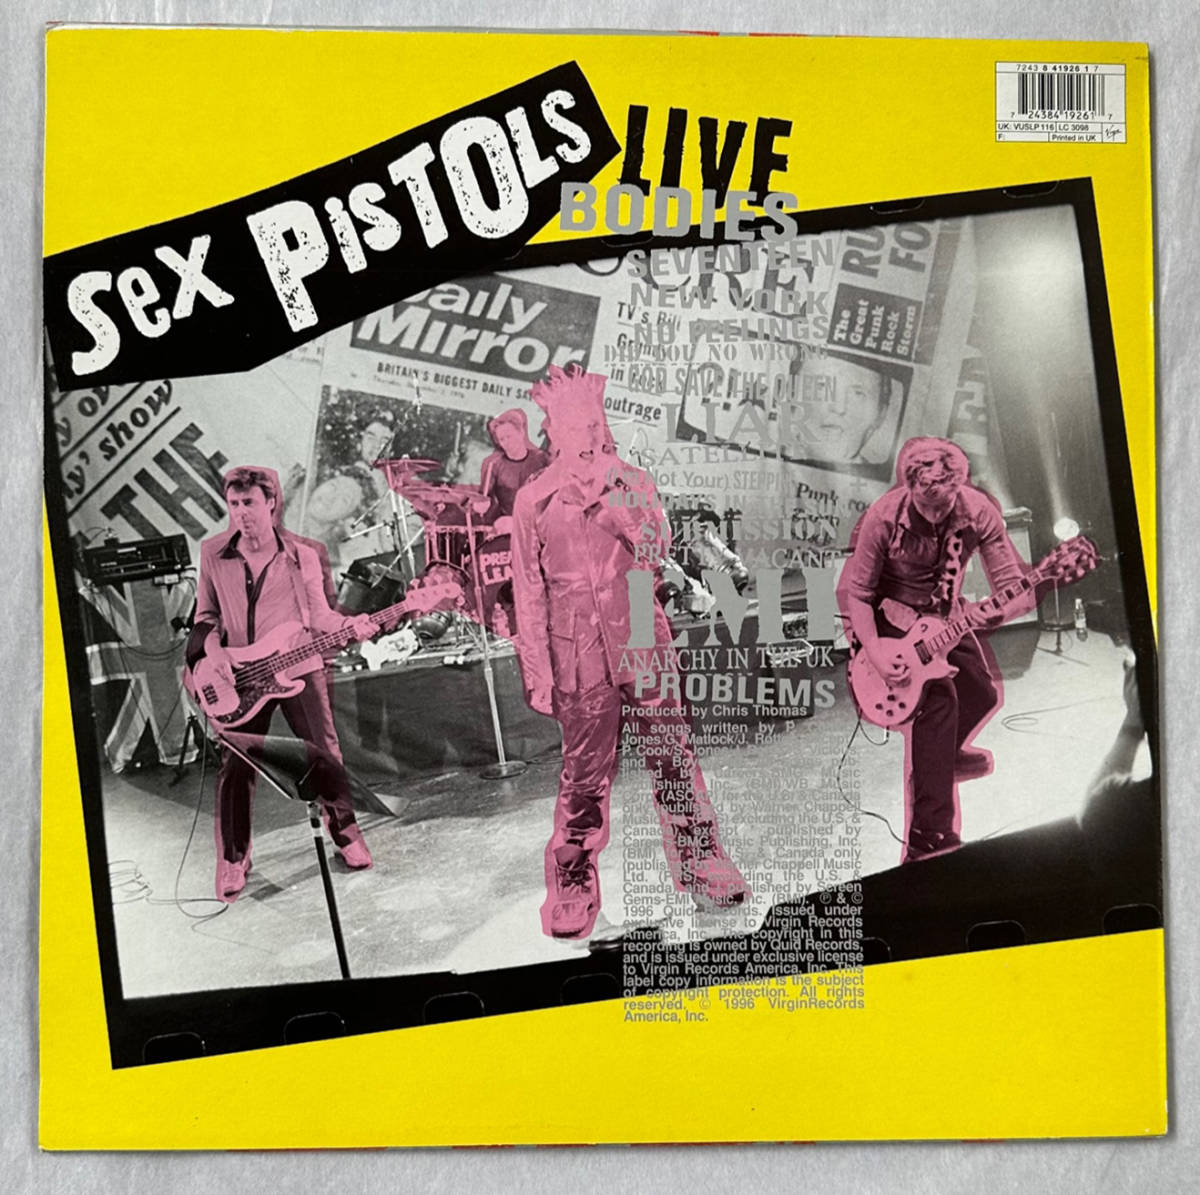 #1996 year original UK record Sex Pistols - Filthy Lucre Live 12~LP 7 24384 19261 7 Virgin Fujiwara hirosiFRAGMENT